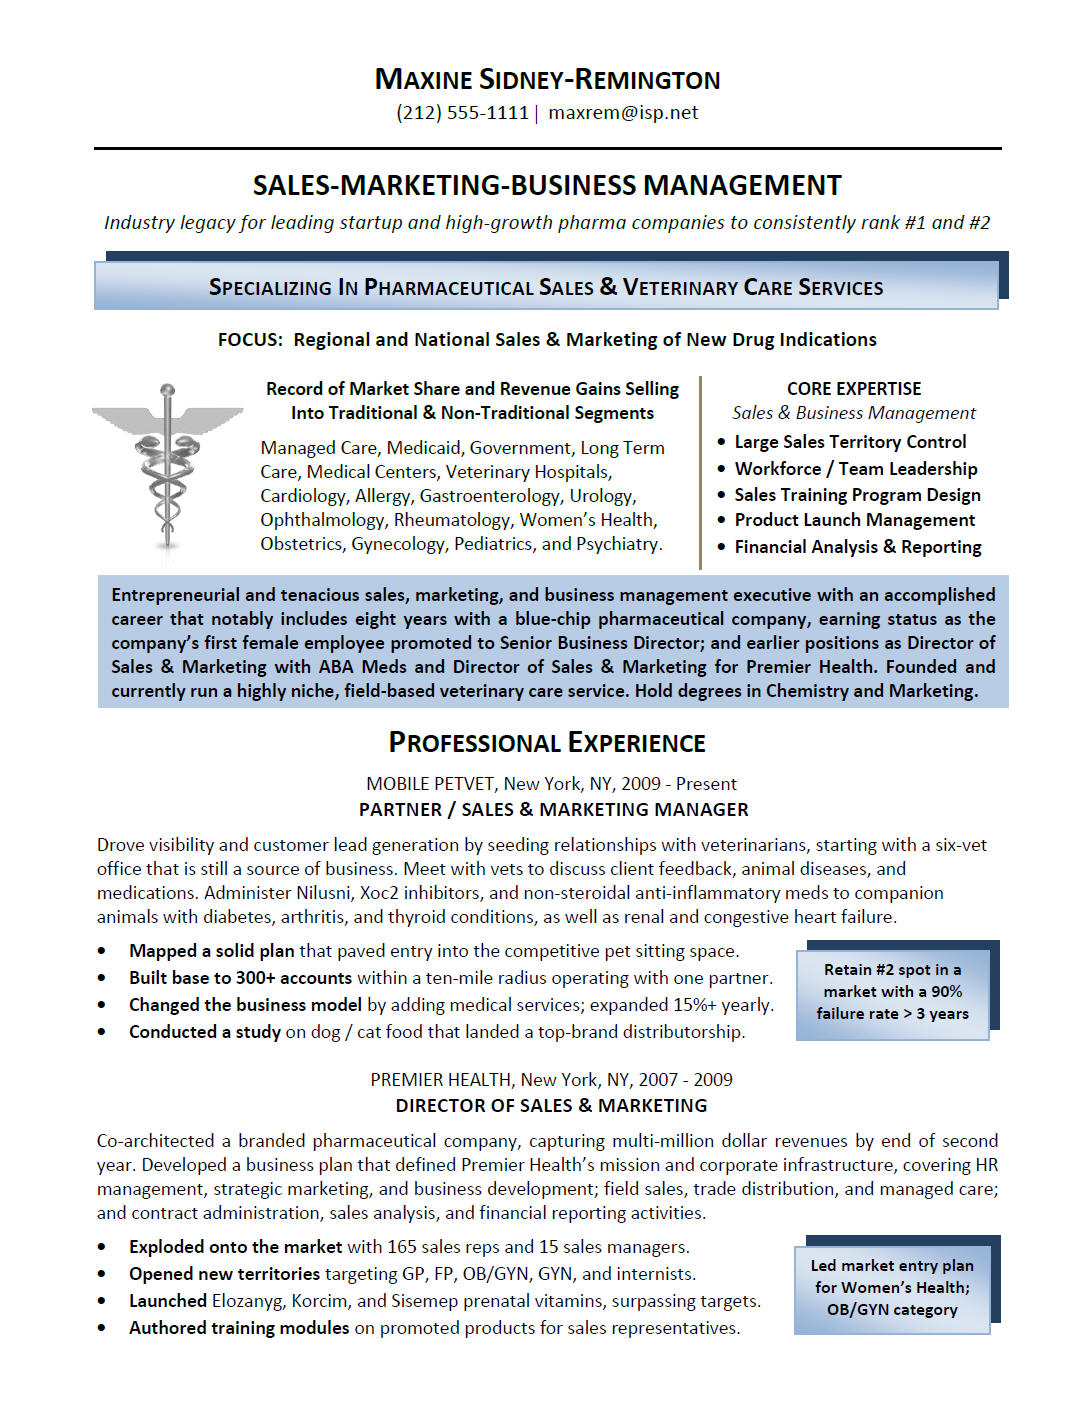 Resume - Pharma Sales and Marketing Executive